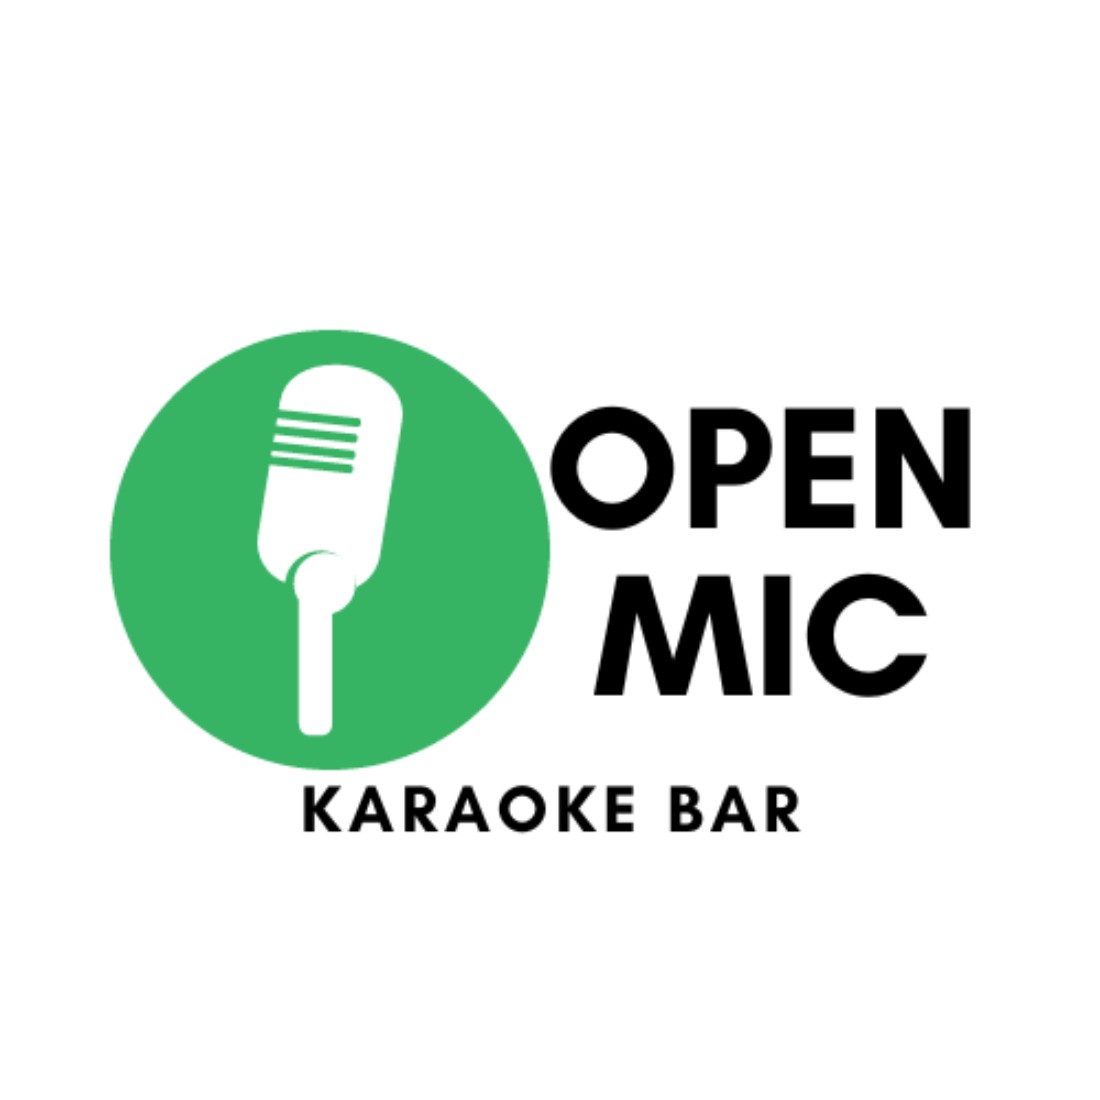 OPEN MIC Karaoke Bar Logo Design cover image.